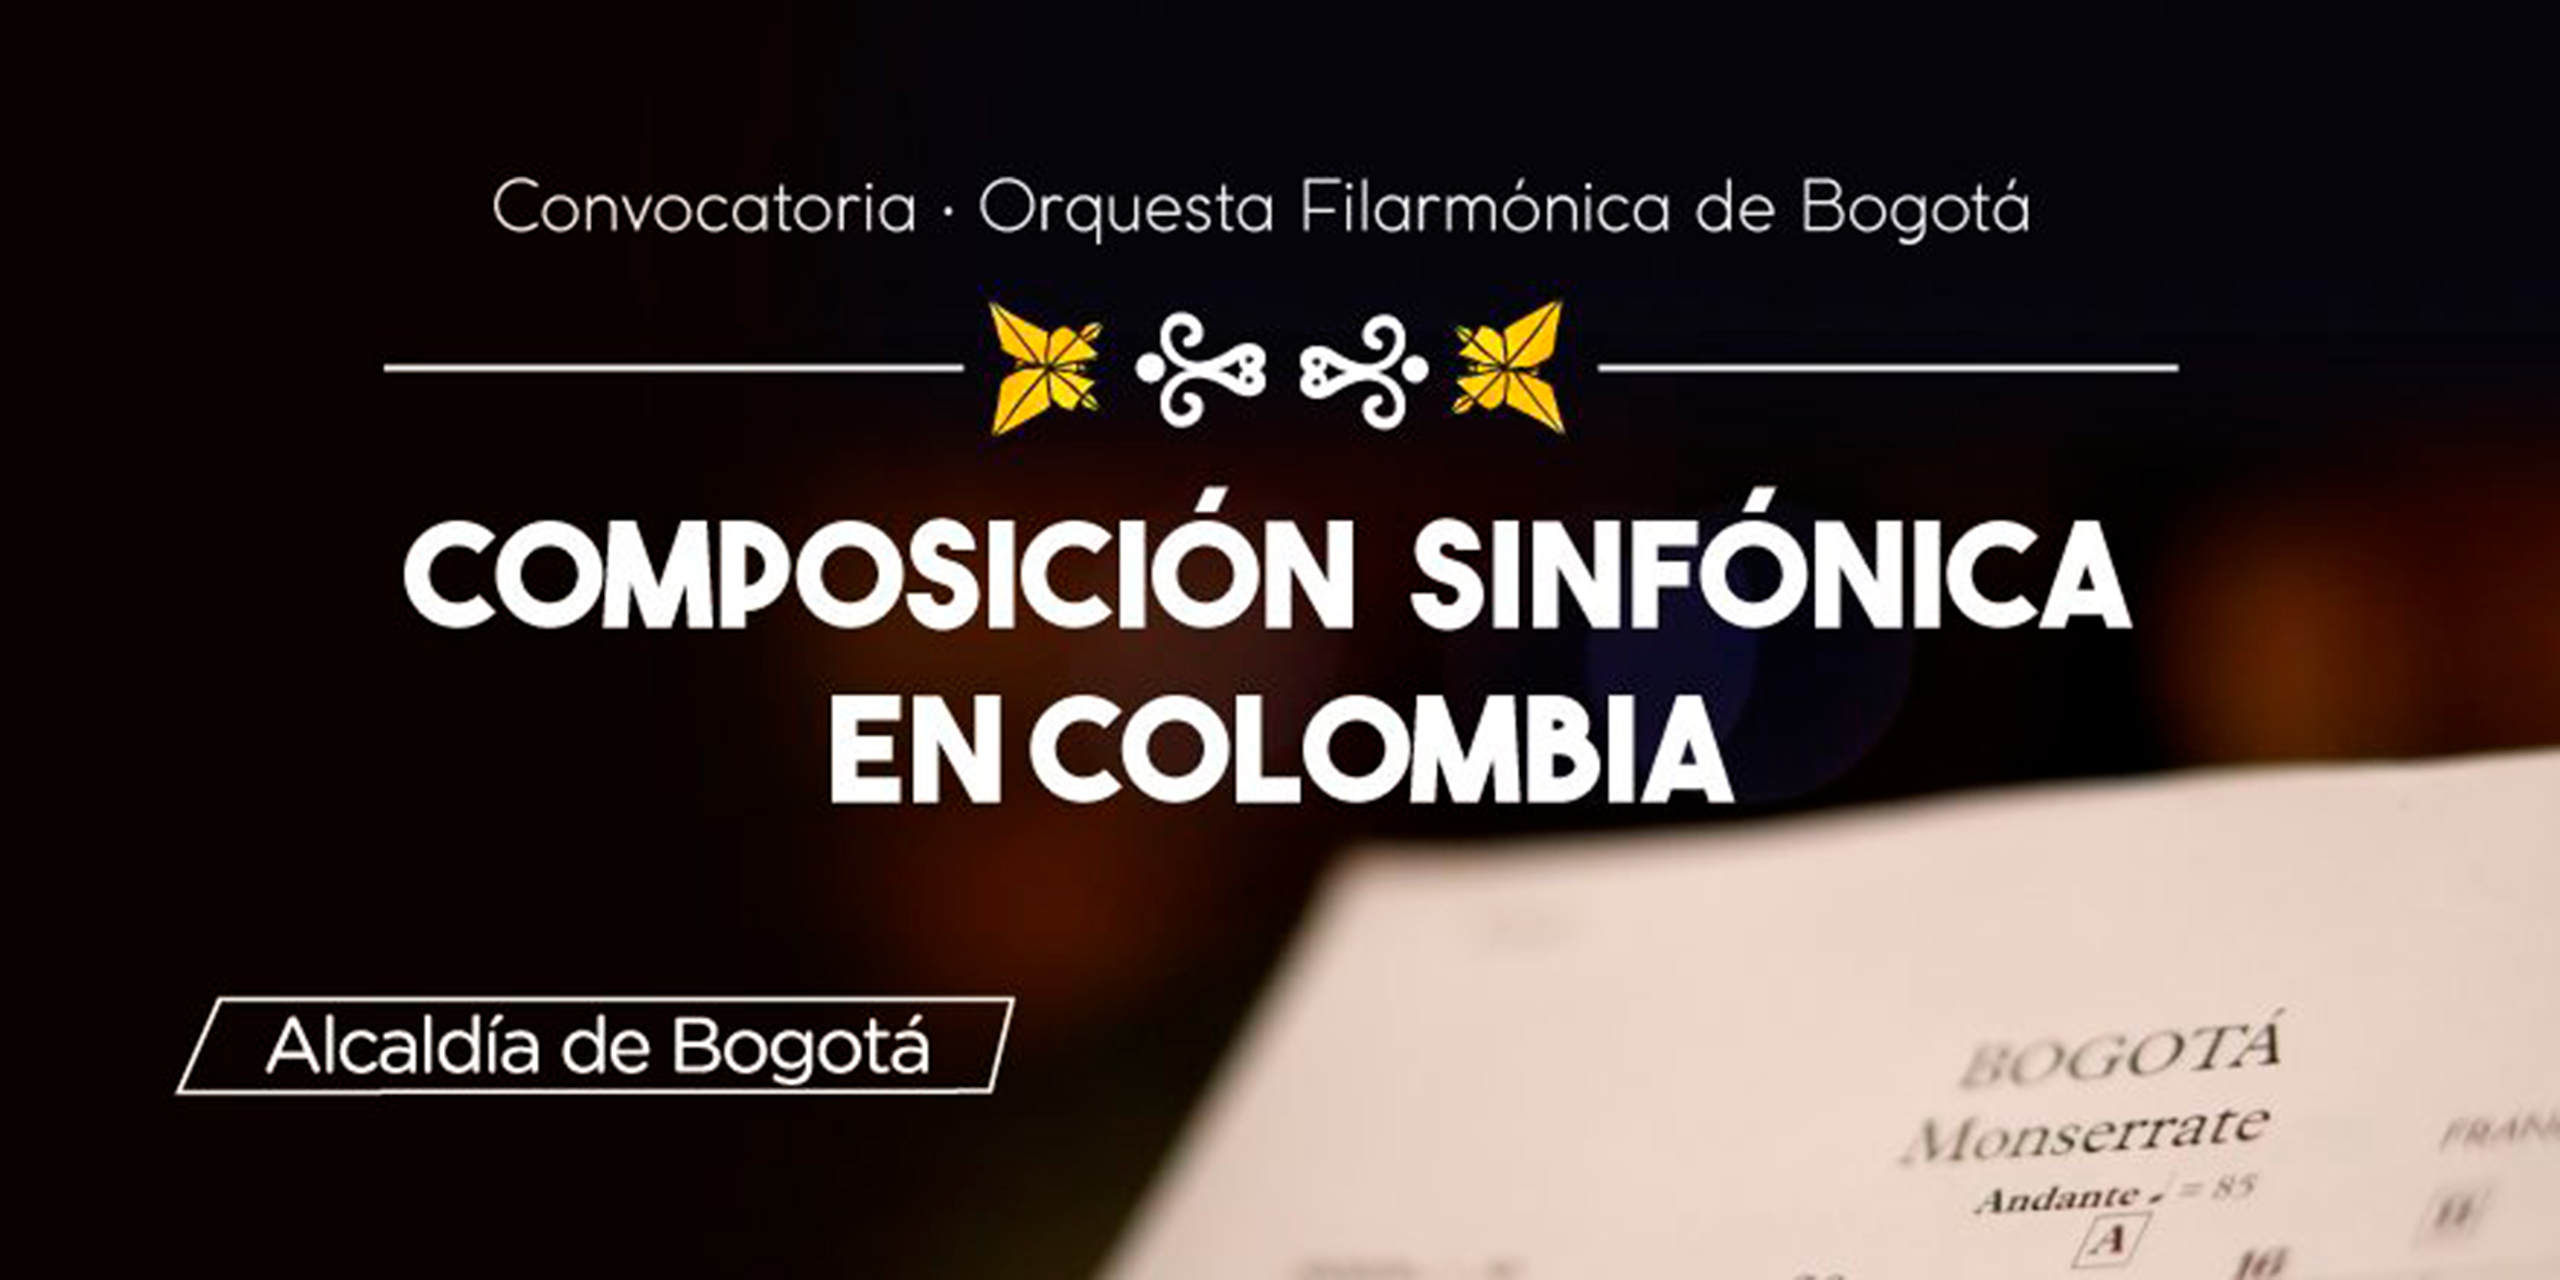 Convocatoria: Composición Sinfónica en Colombia – Catálogo Digital